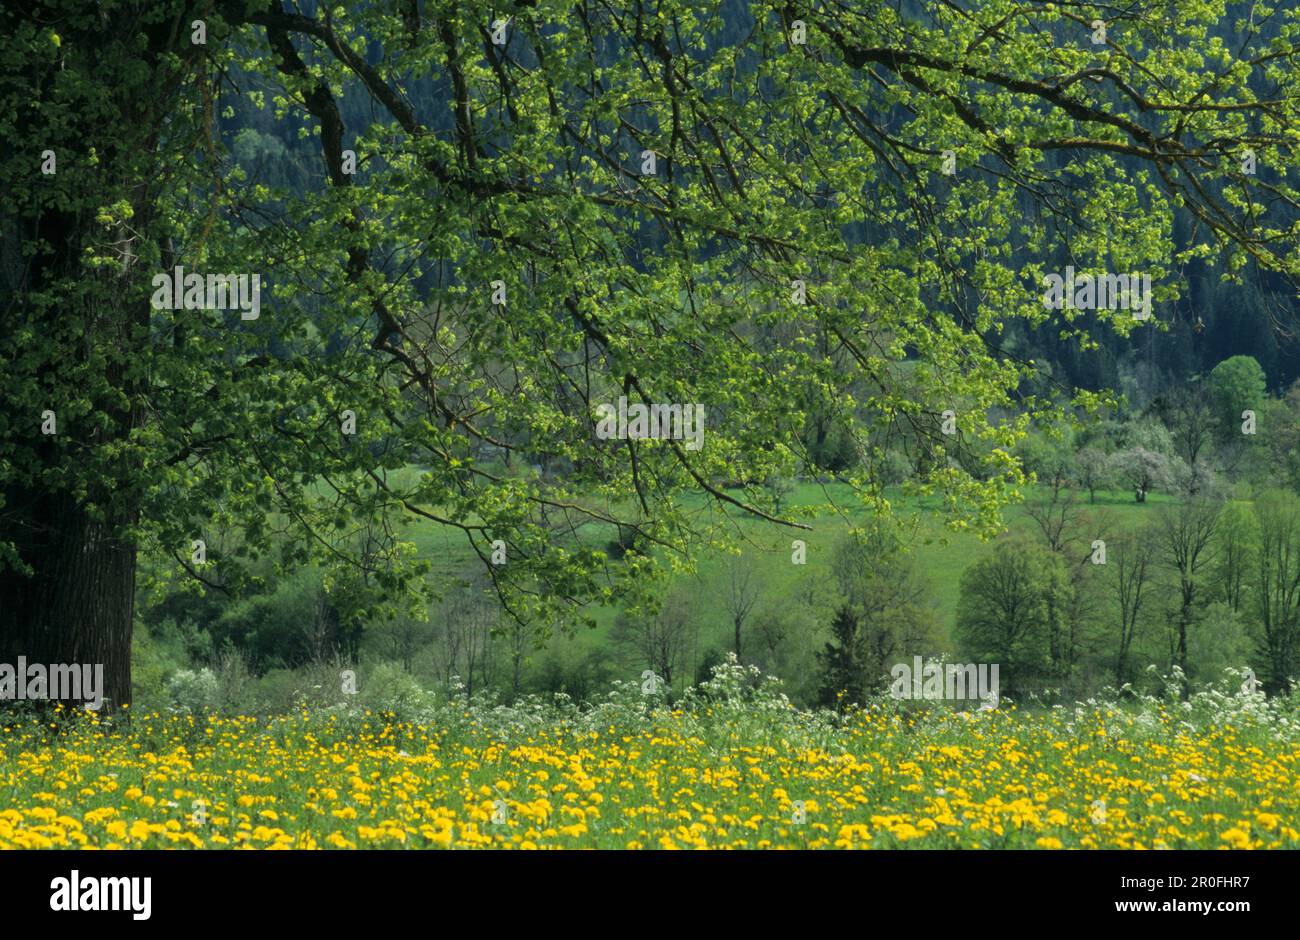 Deciduous tree on meadow with dandelion flowers, Fischbachau, Upper Bavaria, Bavaria, Germany Stock Photo